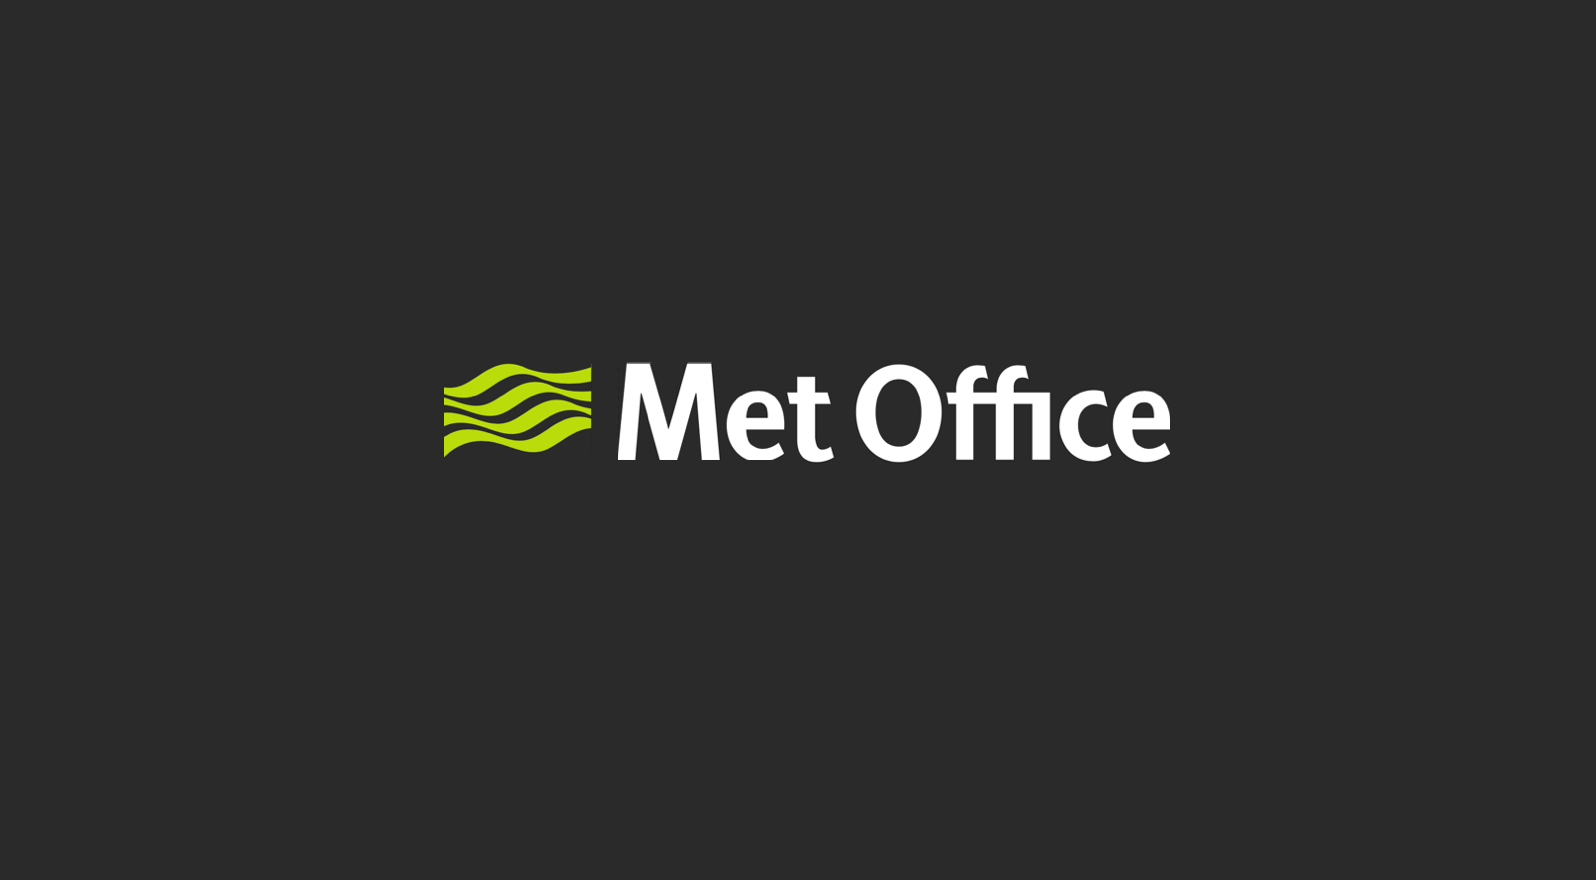 www.metoffice.gov.uk